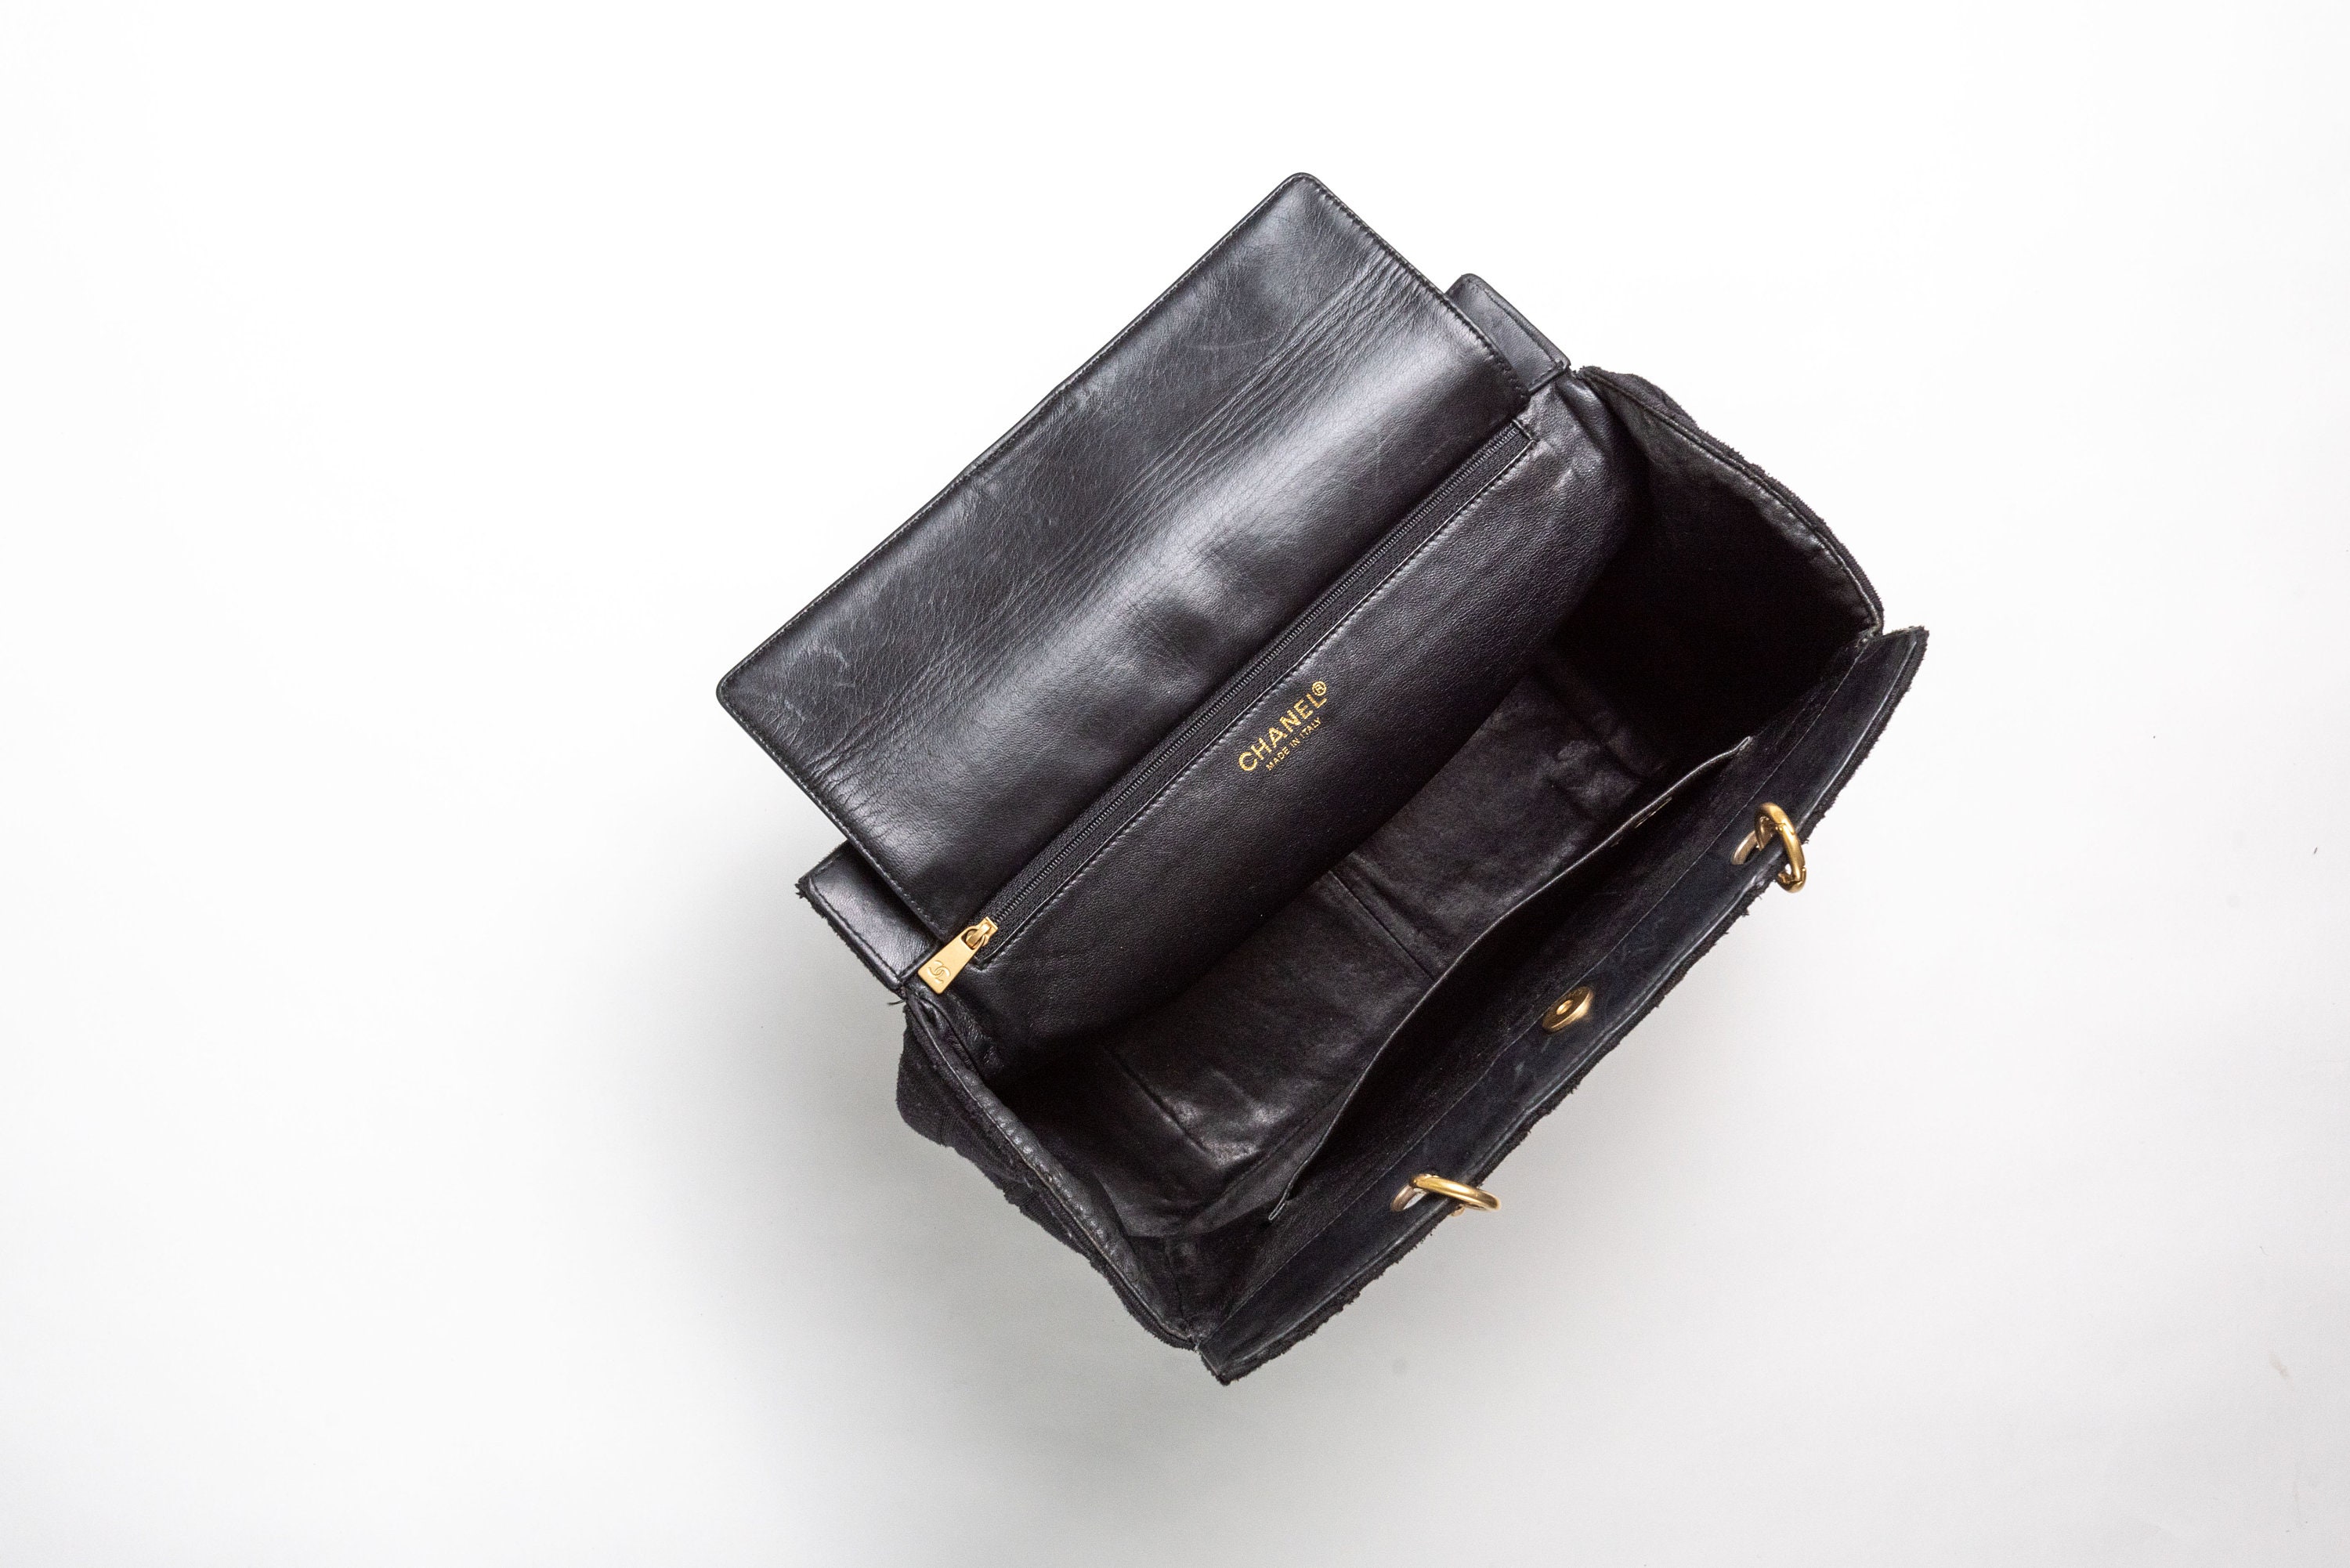 MINISO Black Sling Bag Fashionable Rhomboid Crossbody Bag (Black